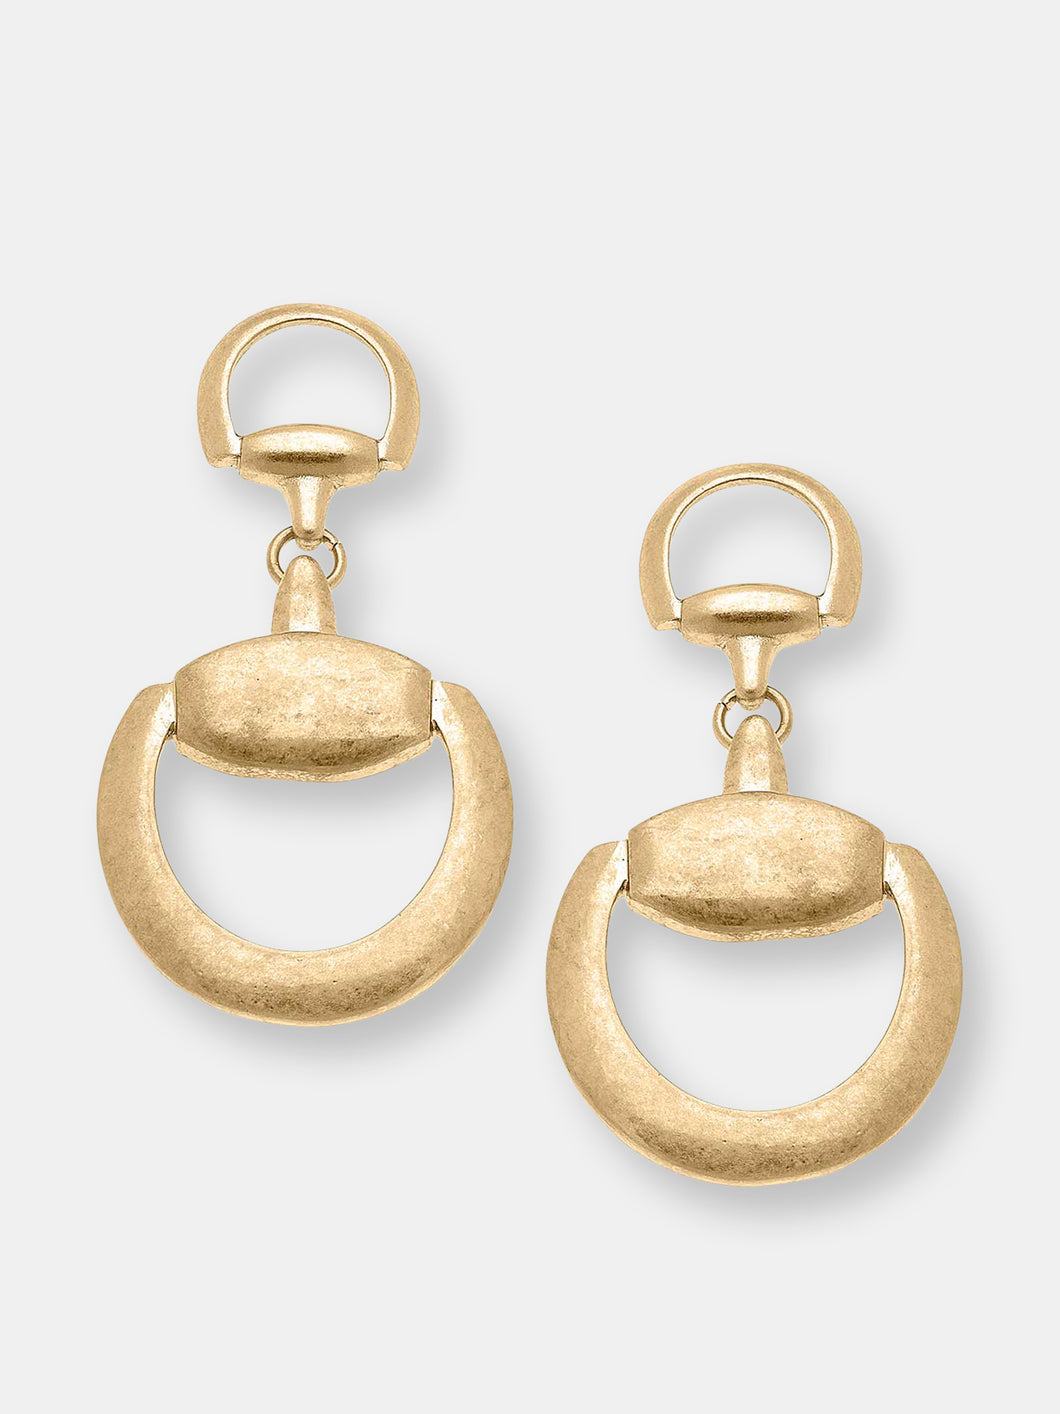 Laurel Horsebit Statement Earrings in Worn Gold